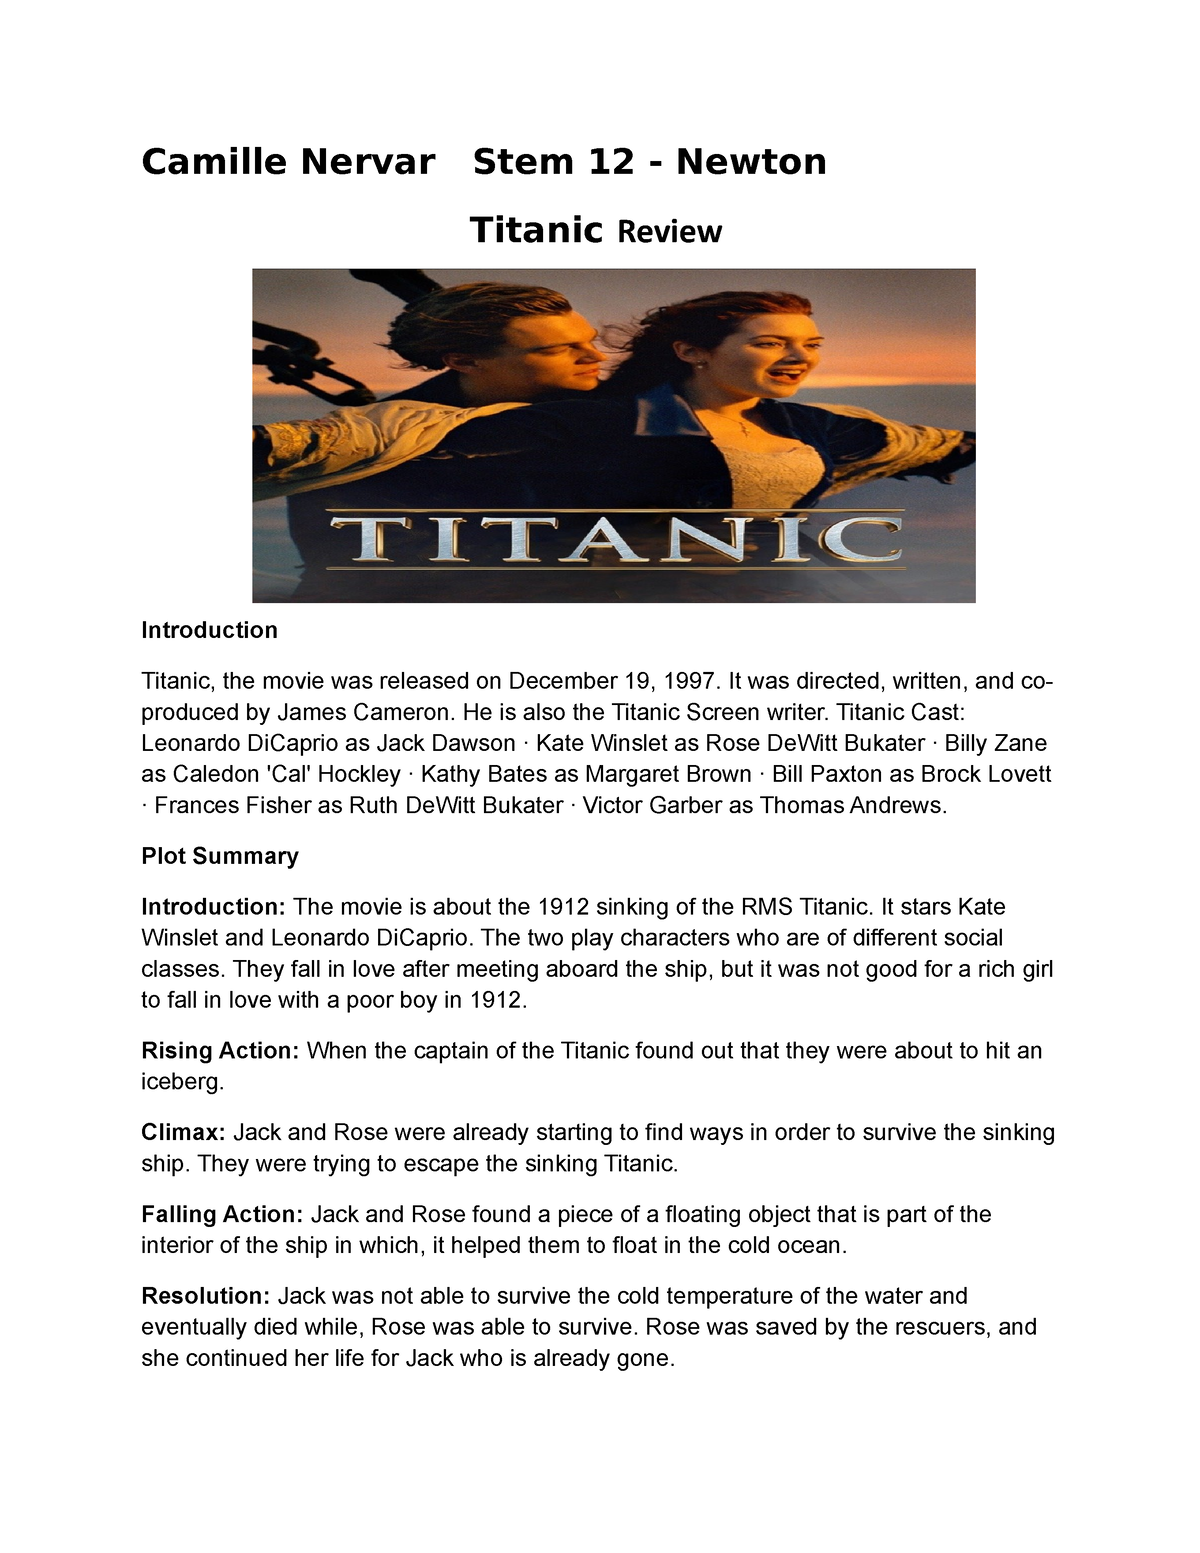 Asdfghjkltitanicreview - Camille Nervar Stem 12 - Newton Titanic Review  Introduction Titanic, the - Studocu